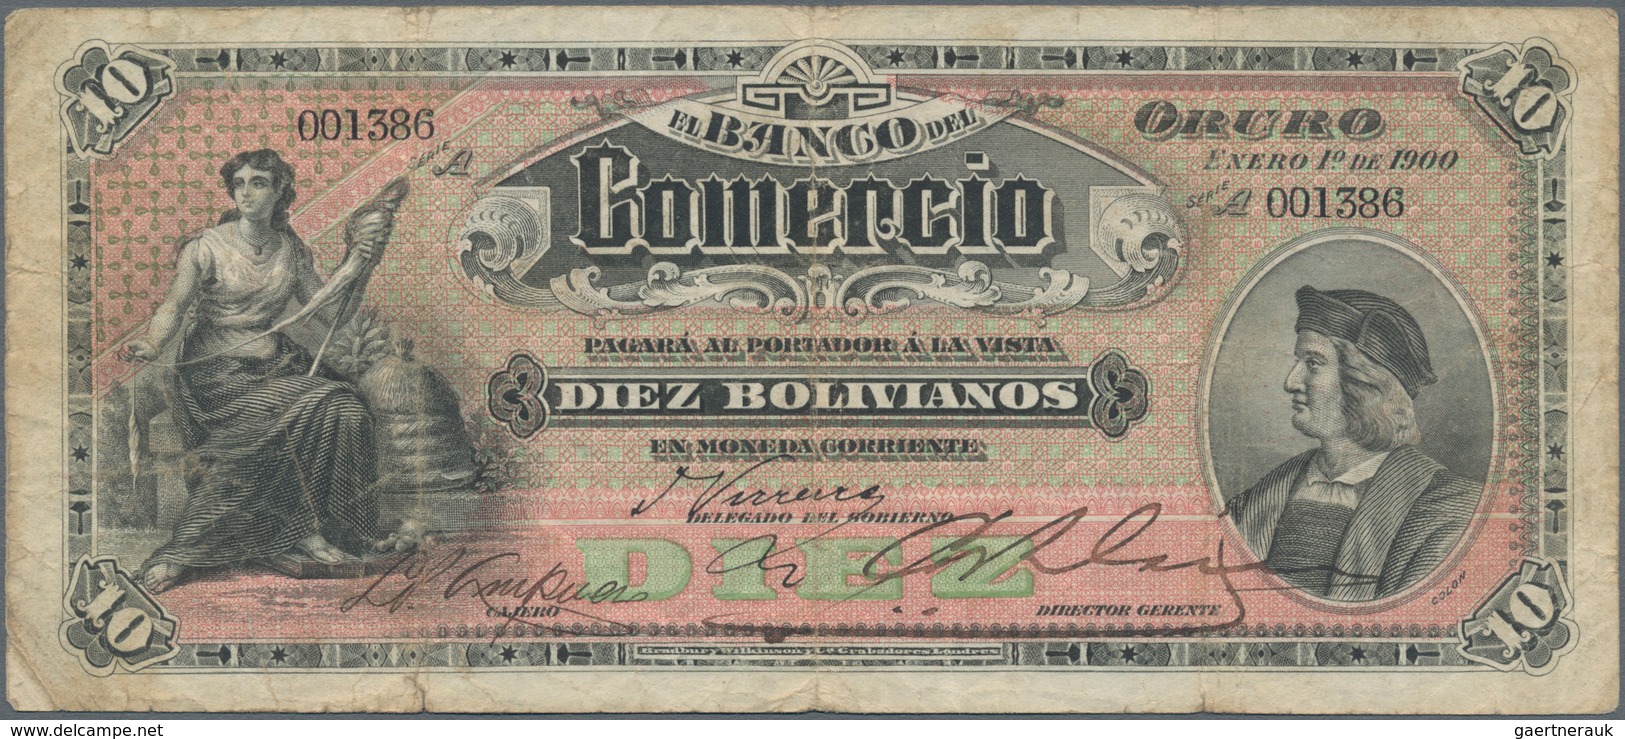 Bolivia / Bolivien: El Banco Del Comercio 10 Bolivianos 1900, P.S133, Still Nice With Strong Paper, - Bolivia